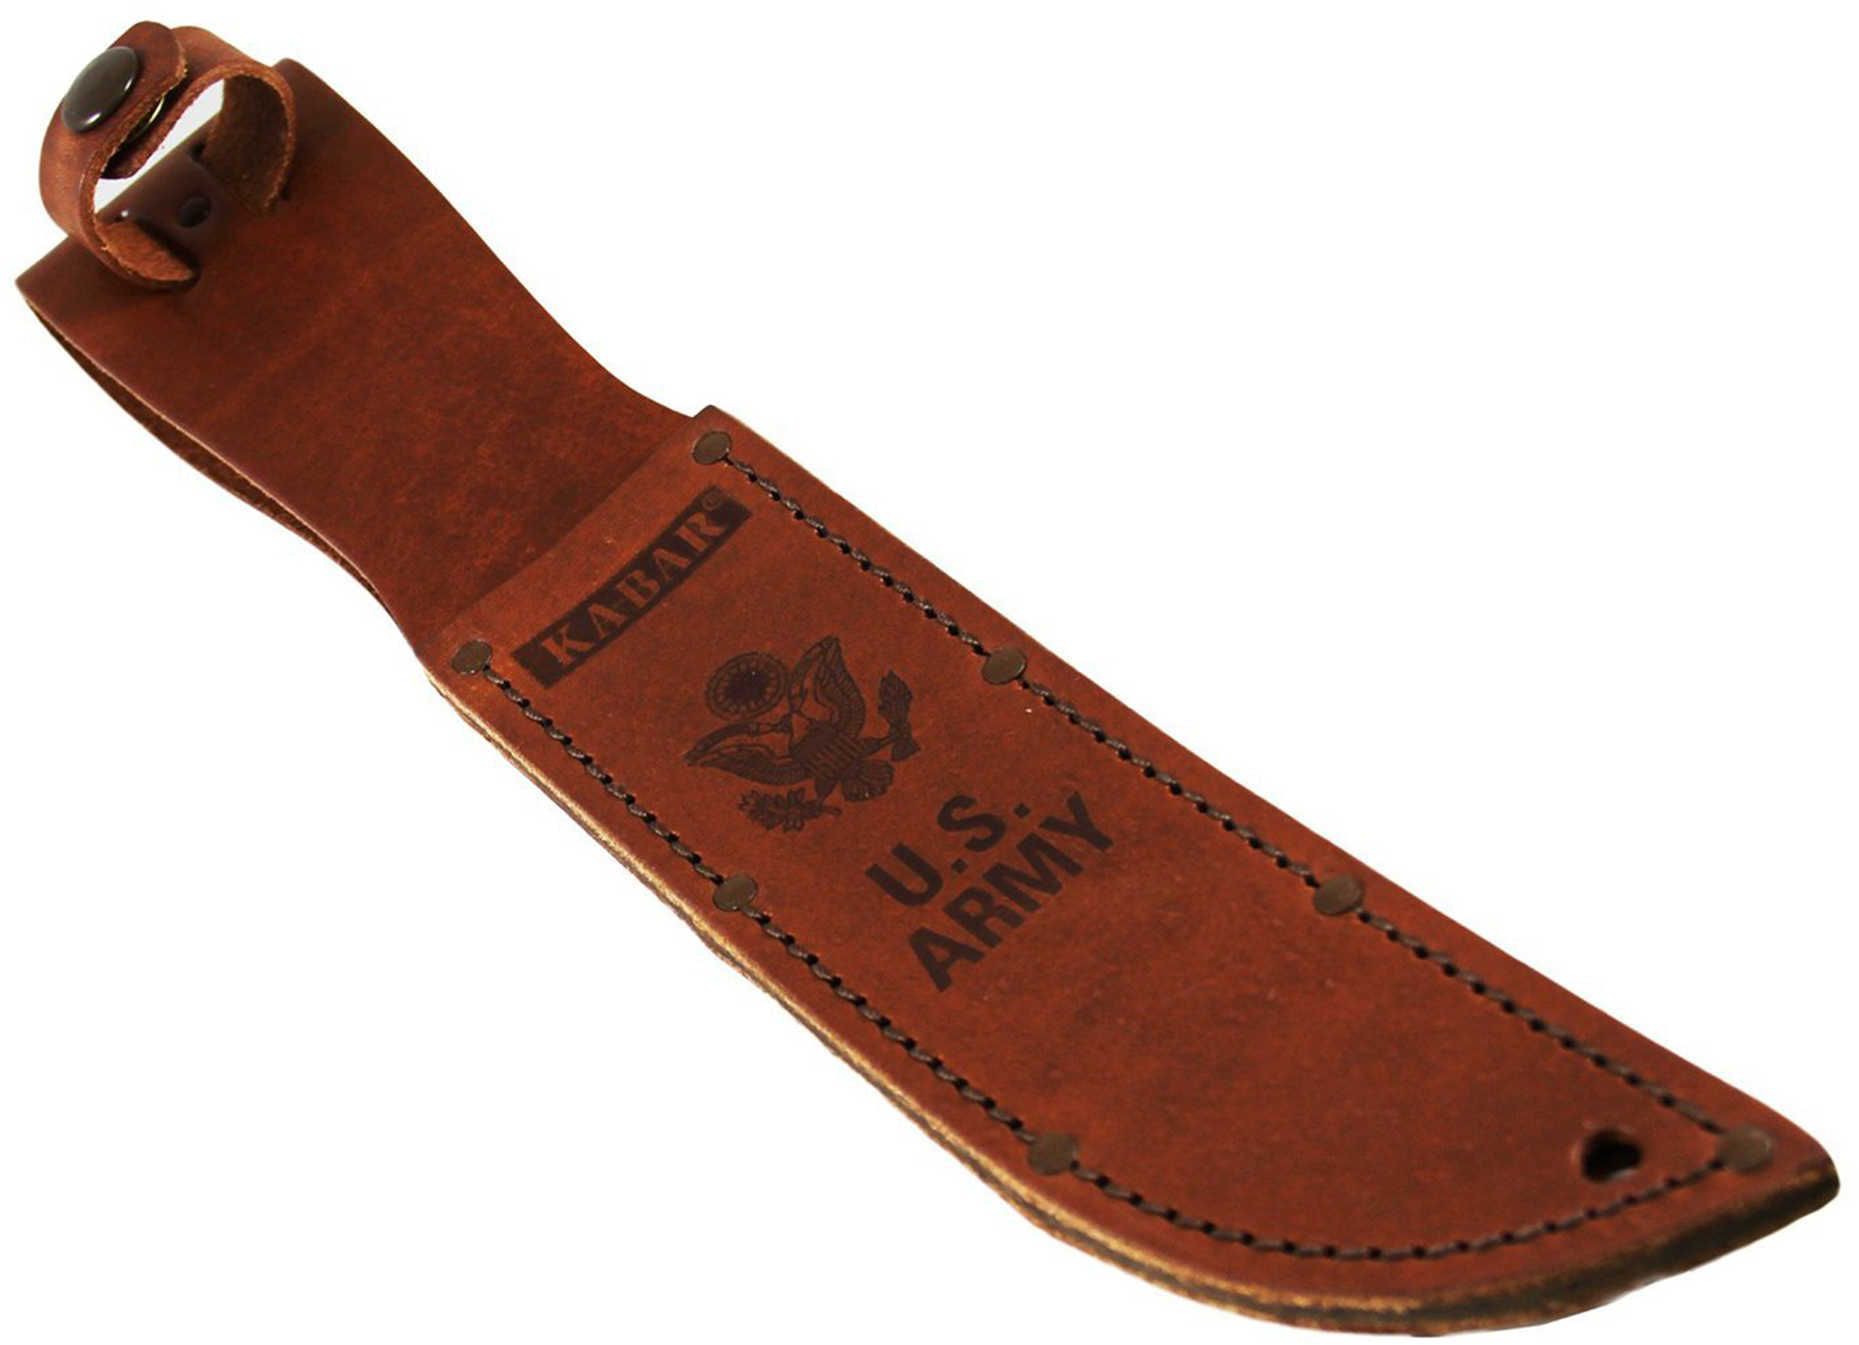 Ka-Bar Leather Sheath Army Logo, Brown Md: 3-1220S-5